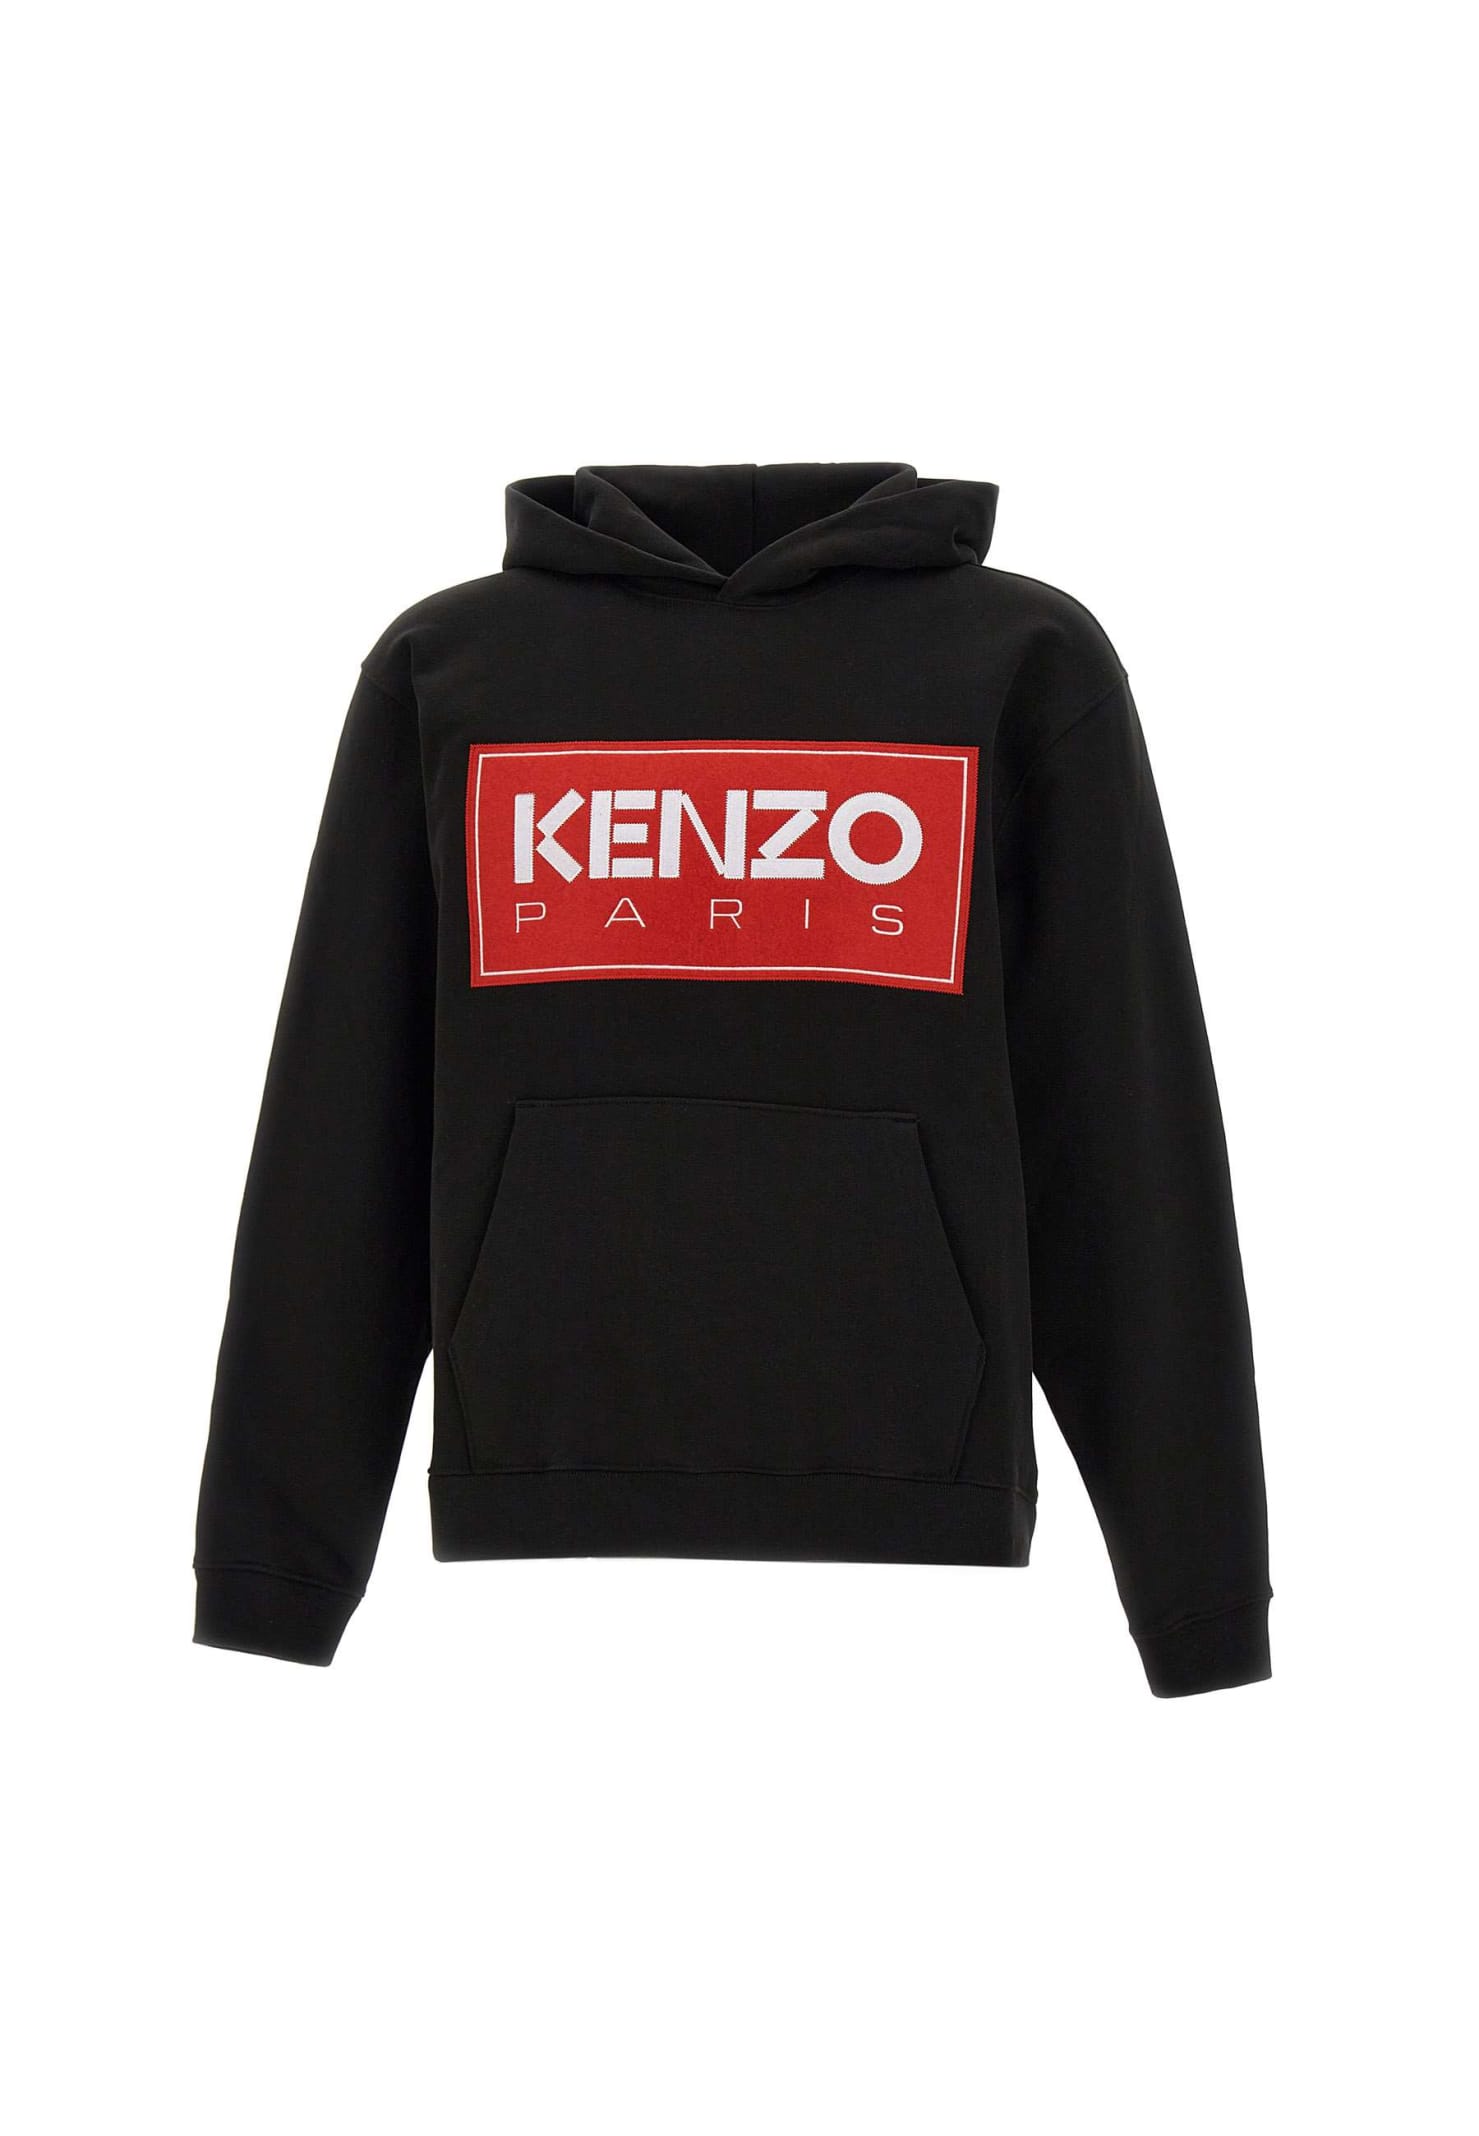 Kenzo Paris classic Hoodie Cotton Sweatshirt